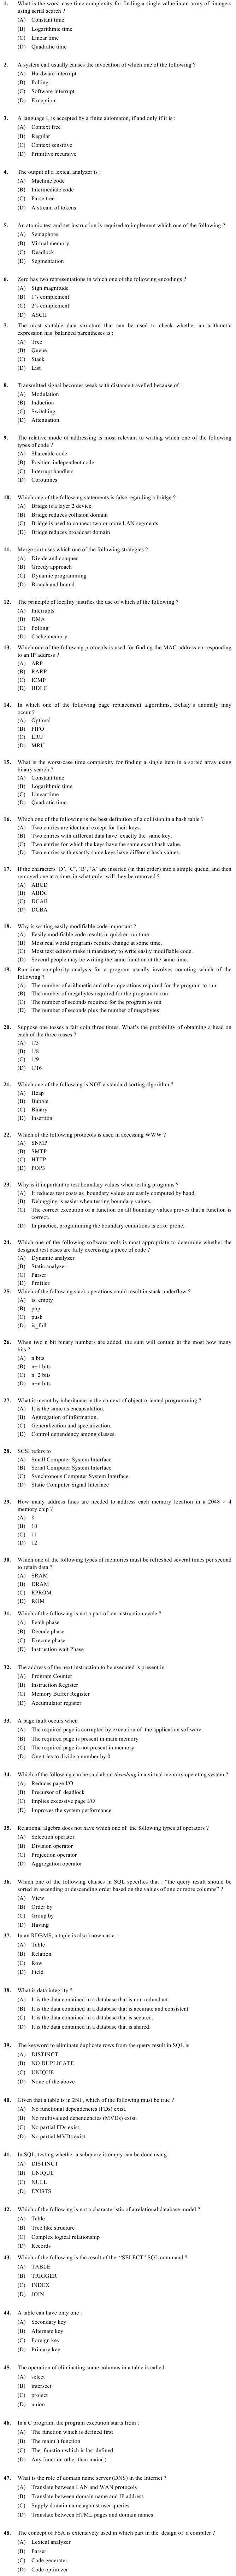 OJEE 2013 Question Paper for PGAT CSE/IT